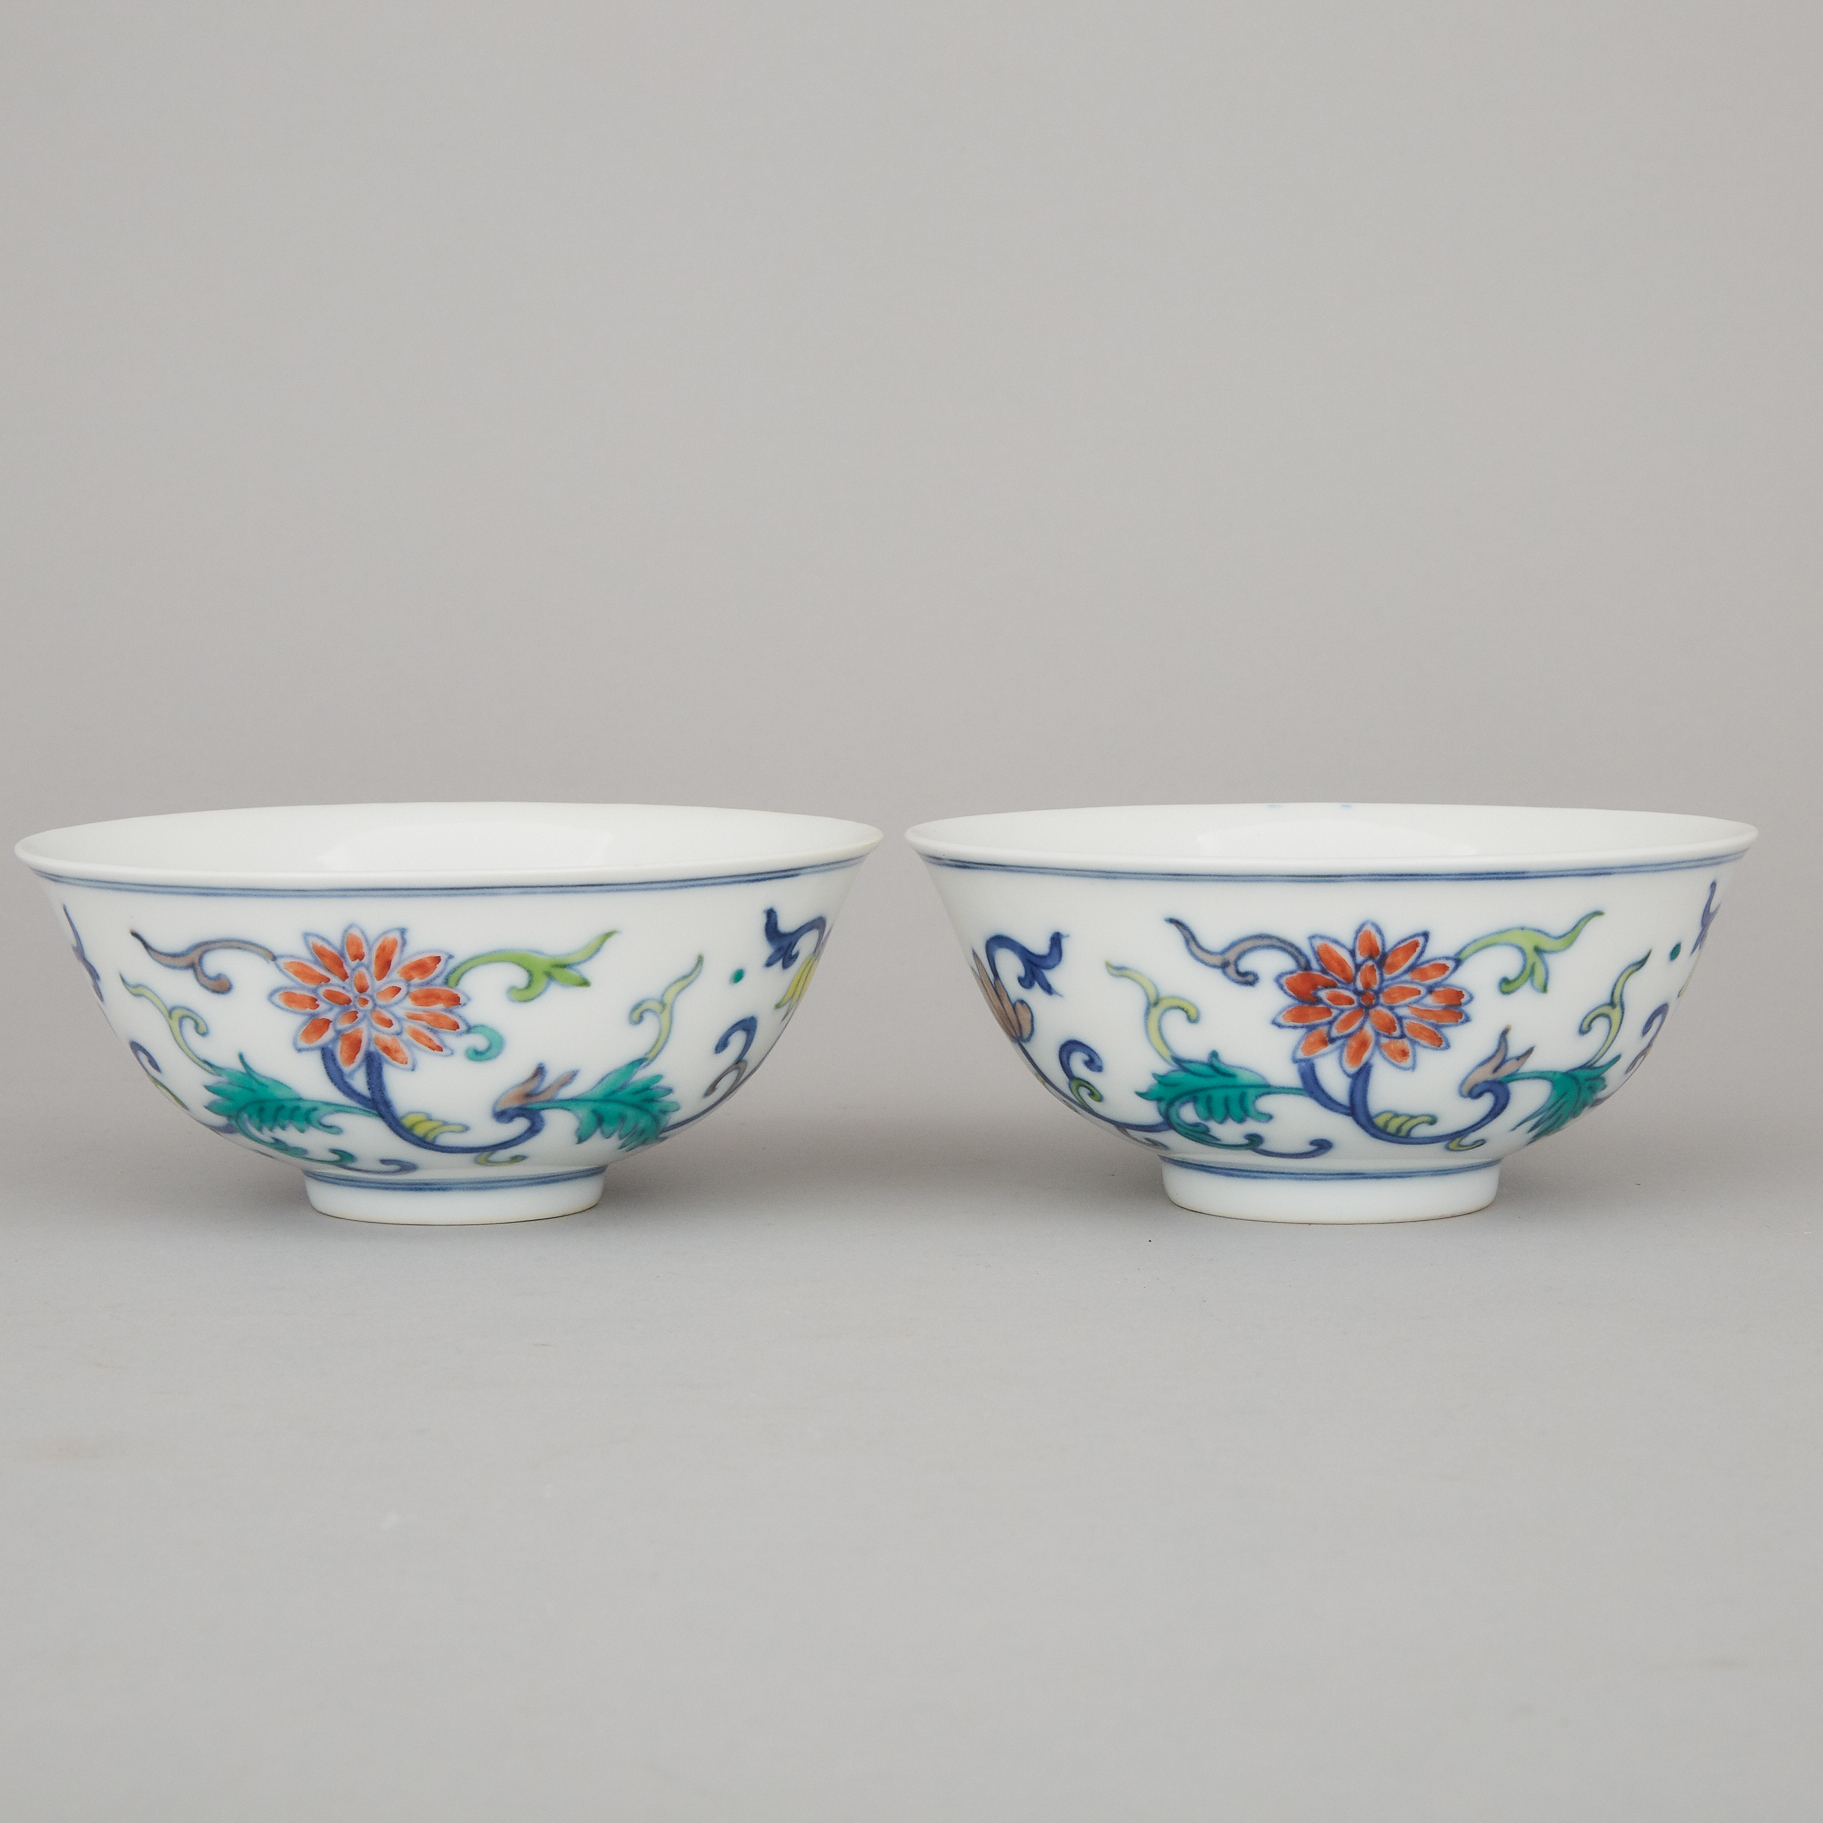 A Pair of Doucai Bowls, Qianlong Mark